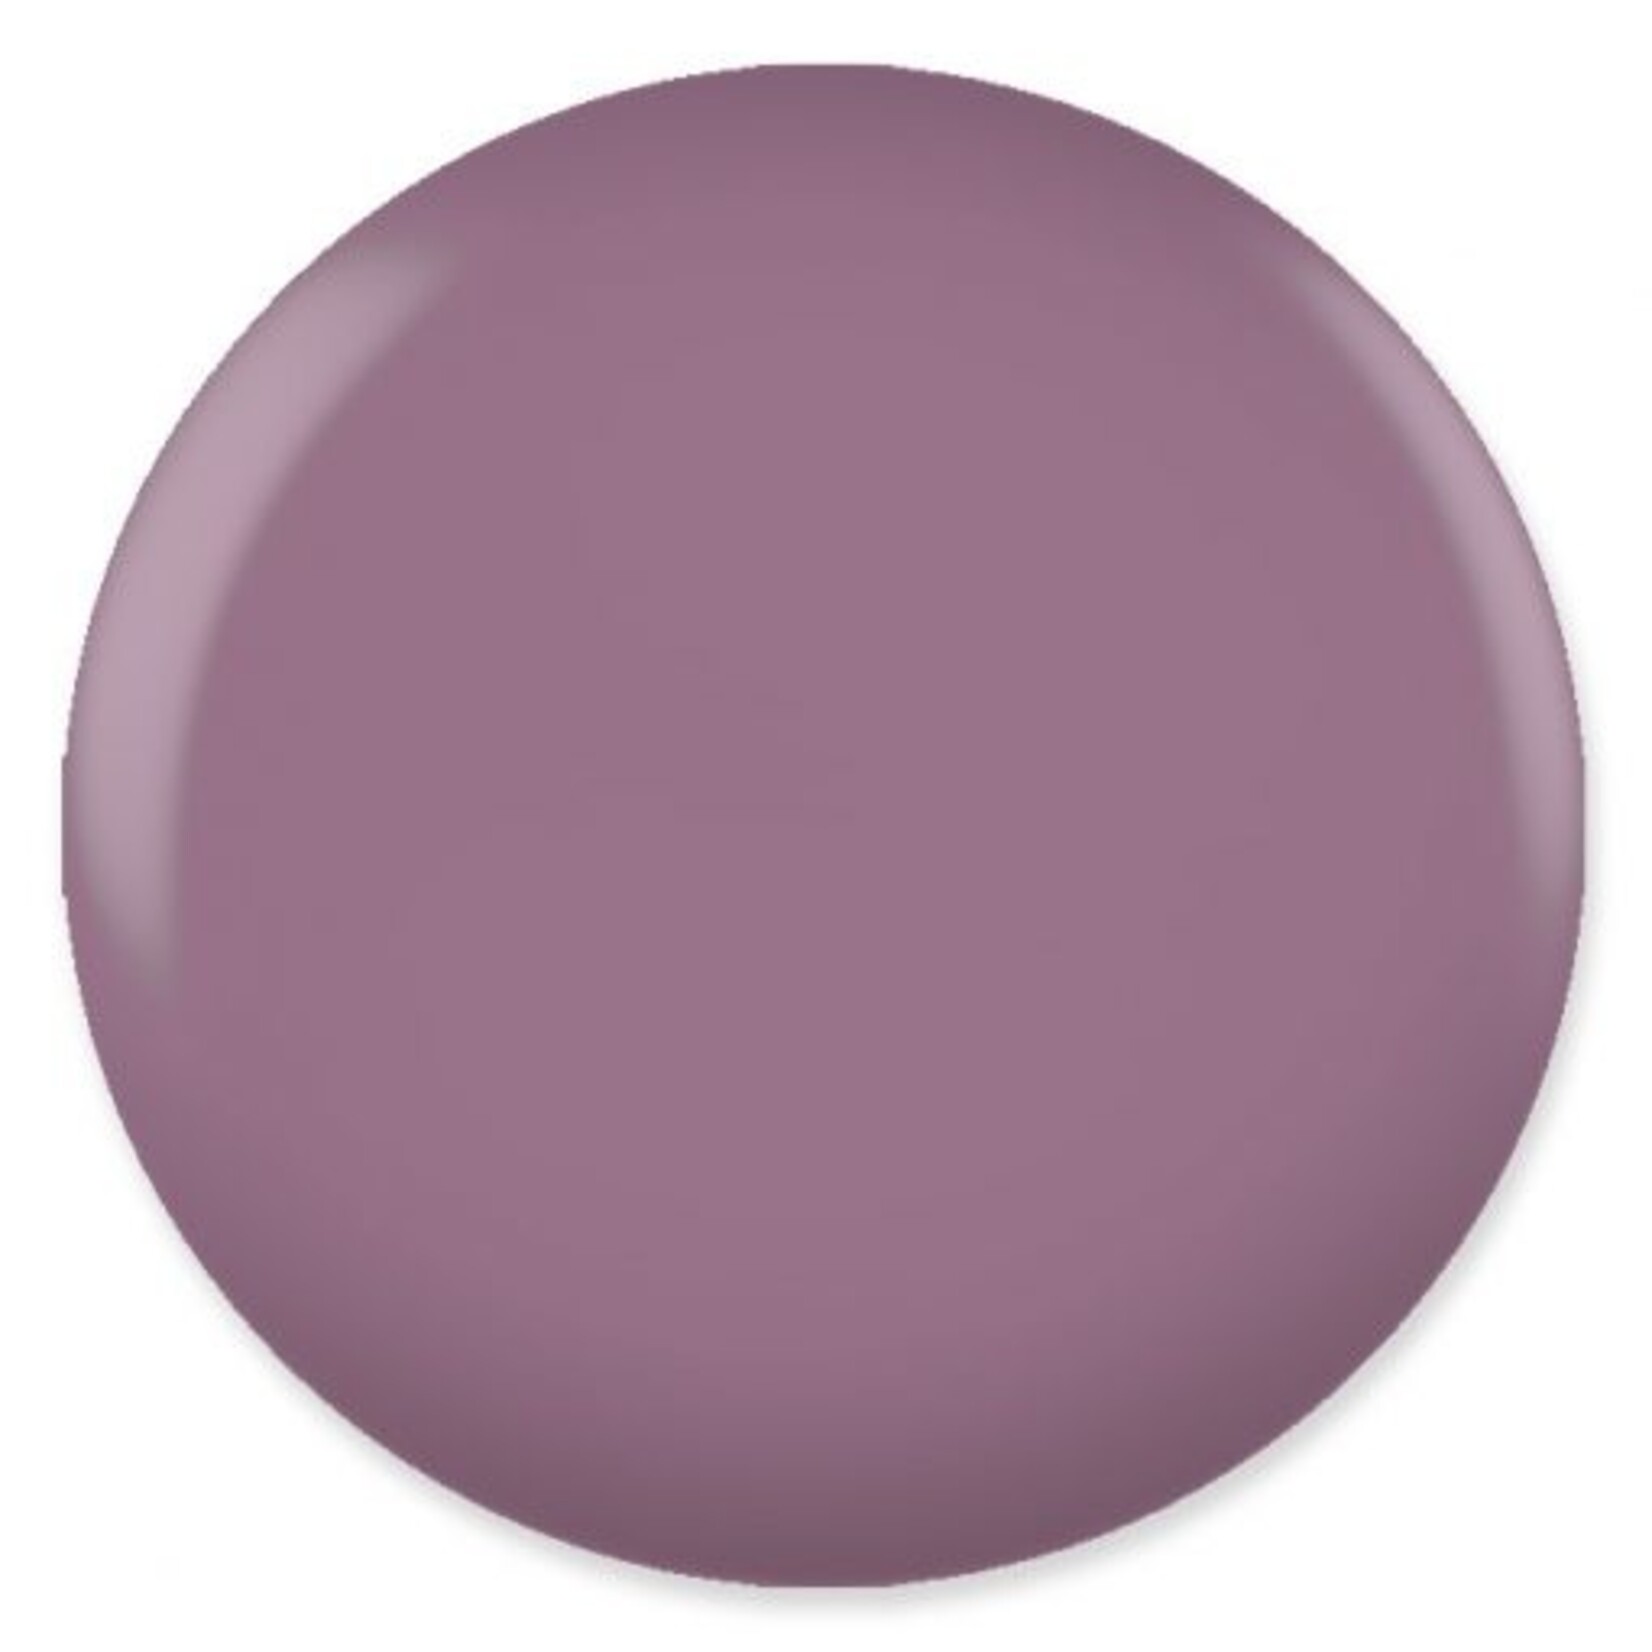 DND DND - 0 489 - Antique Purple - DUO Polish